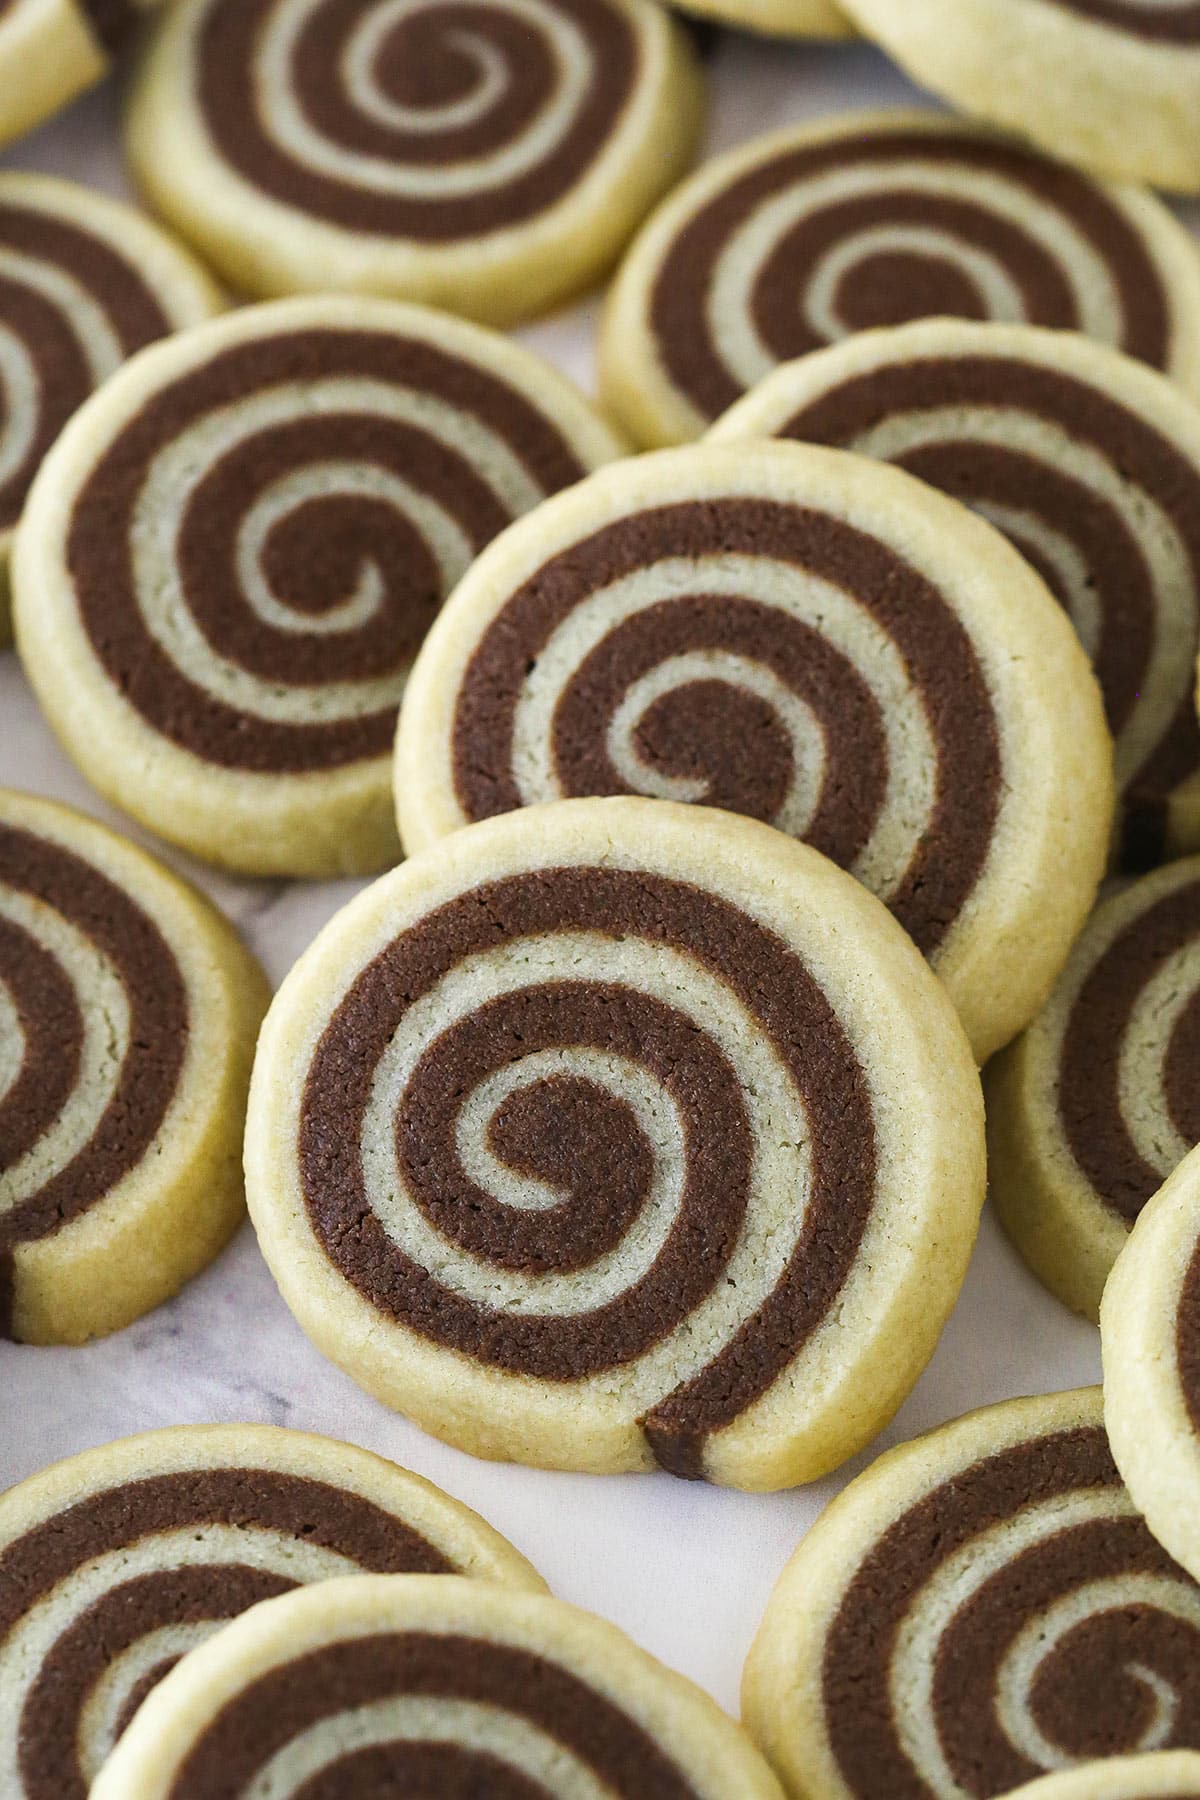 Chocolate Pinwheel Cookies - An Eye-Catching Cookie Jar Addition